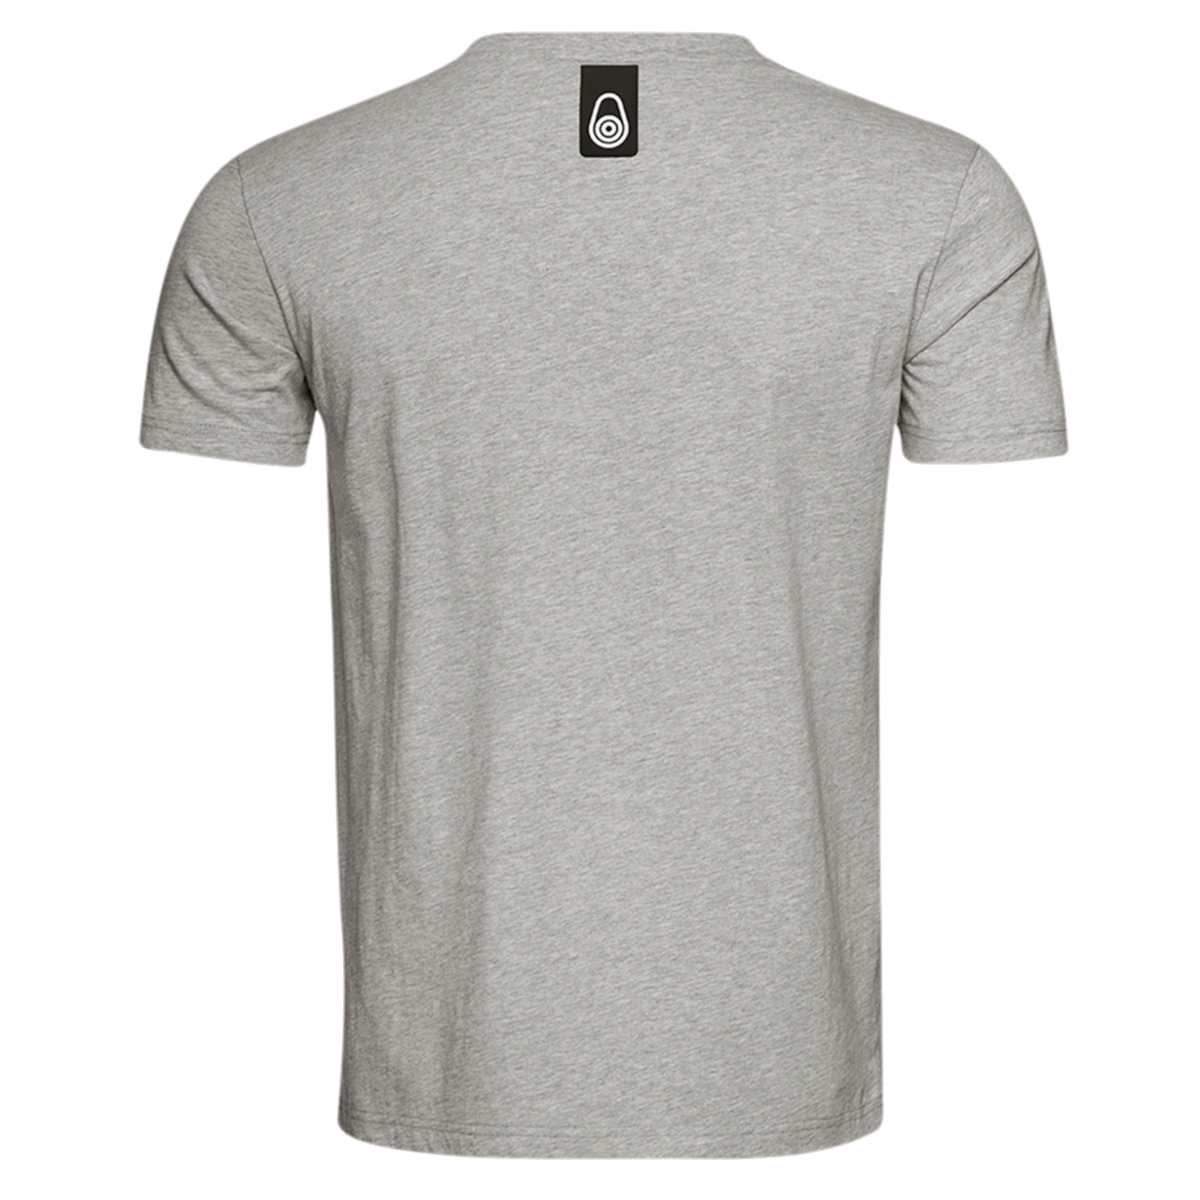 Team ESP Grey T-Shirt